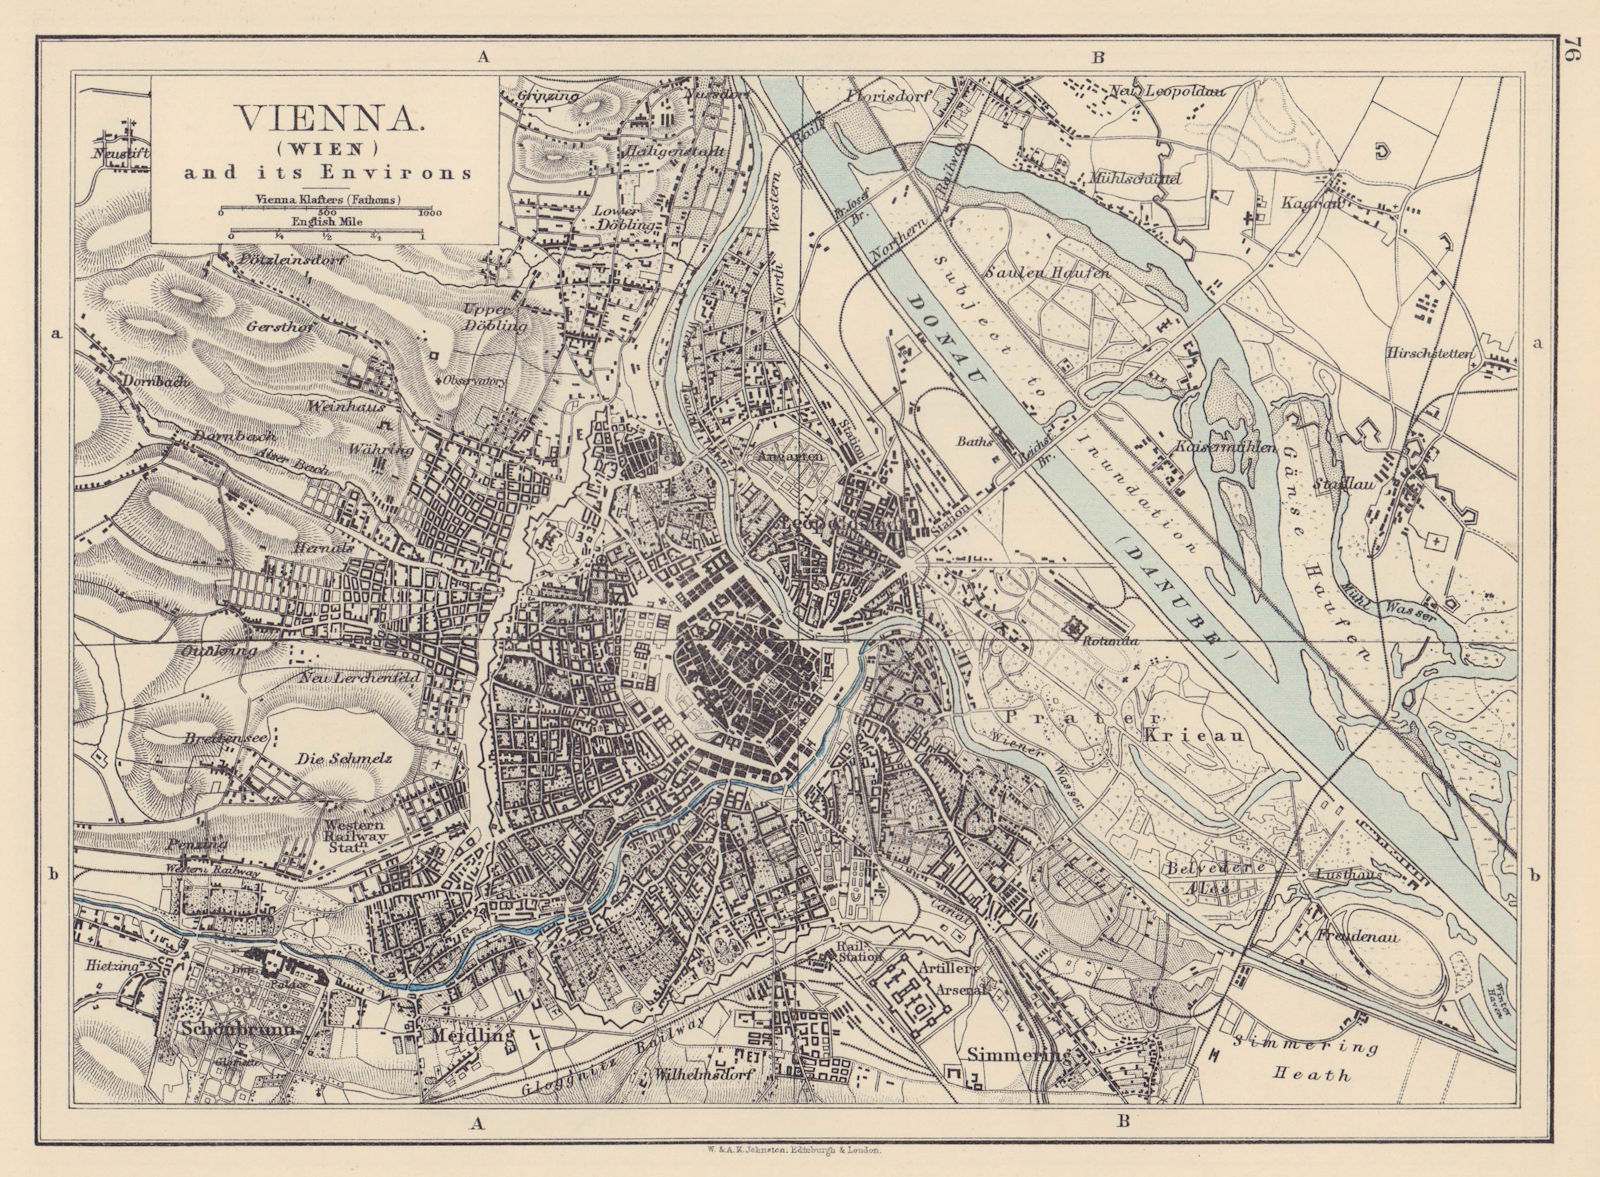 VIENNA (WIEN) . City plan. Danube river. Austria. JOHNSTON 1901 old map